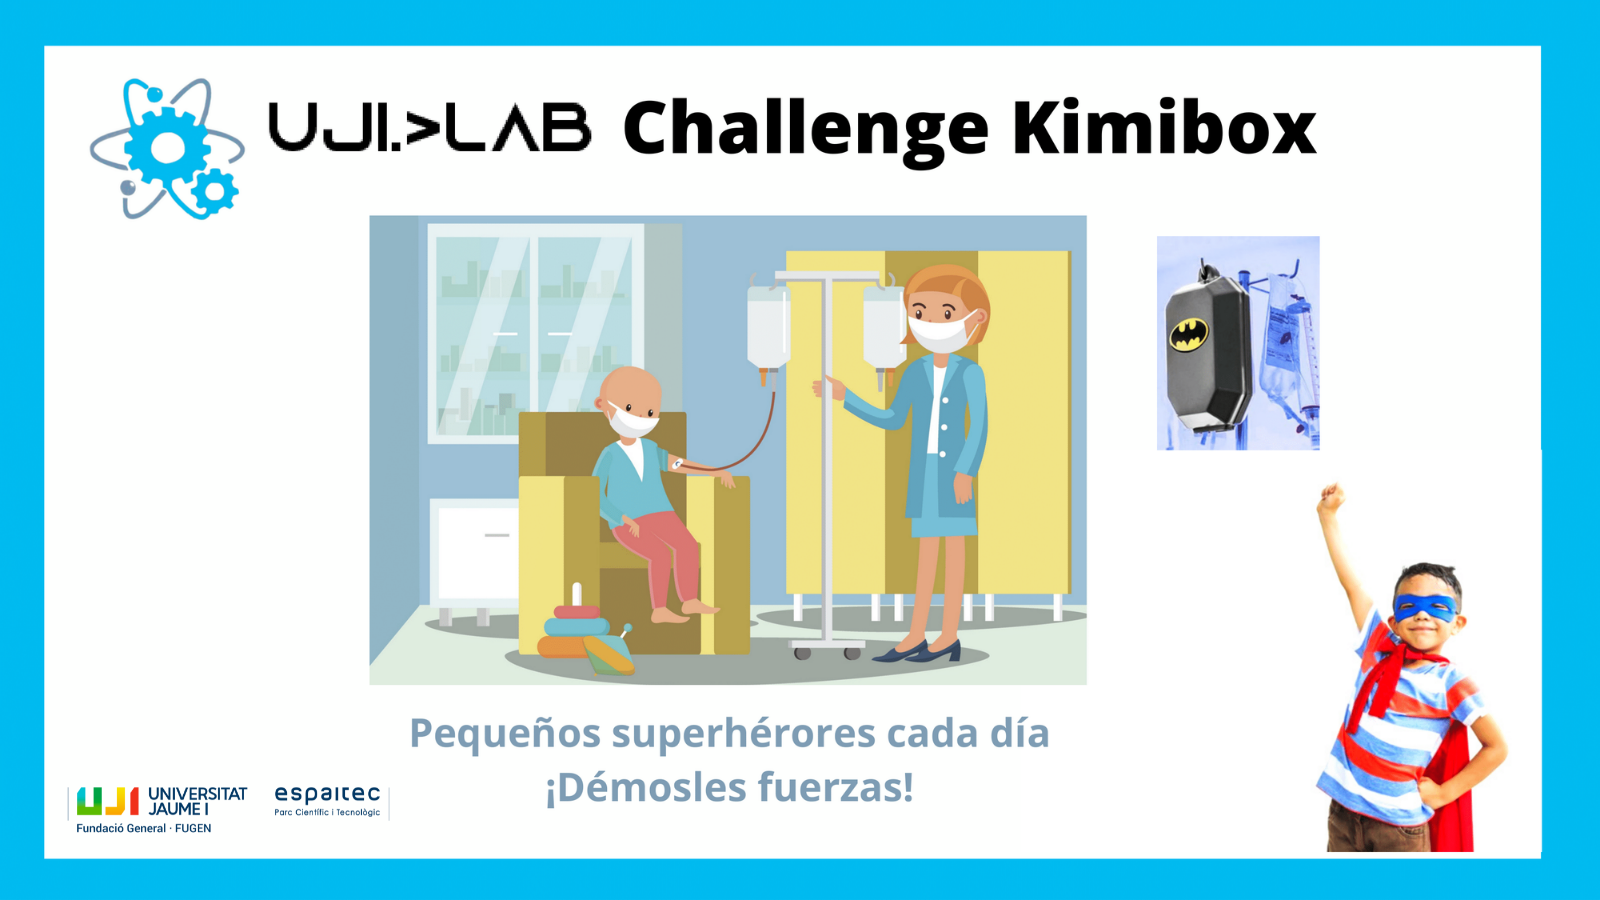 UJI.></noscript>LAB Challenge Kimibox